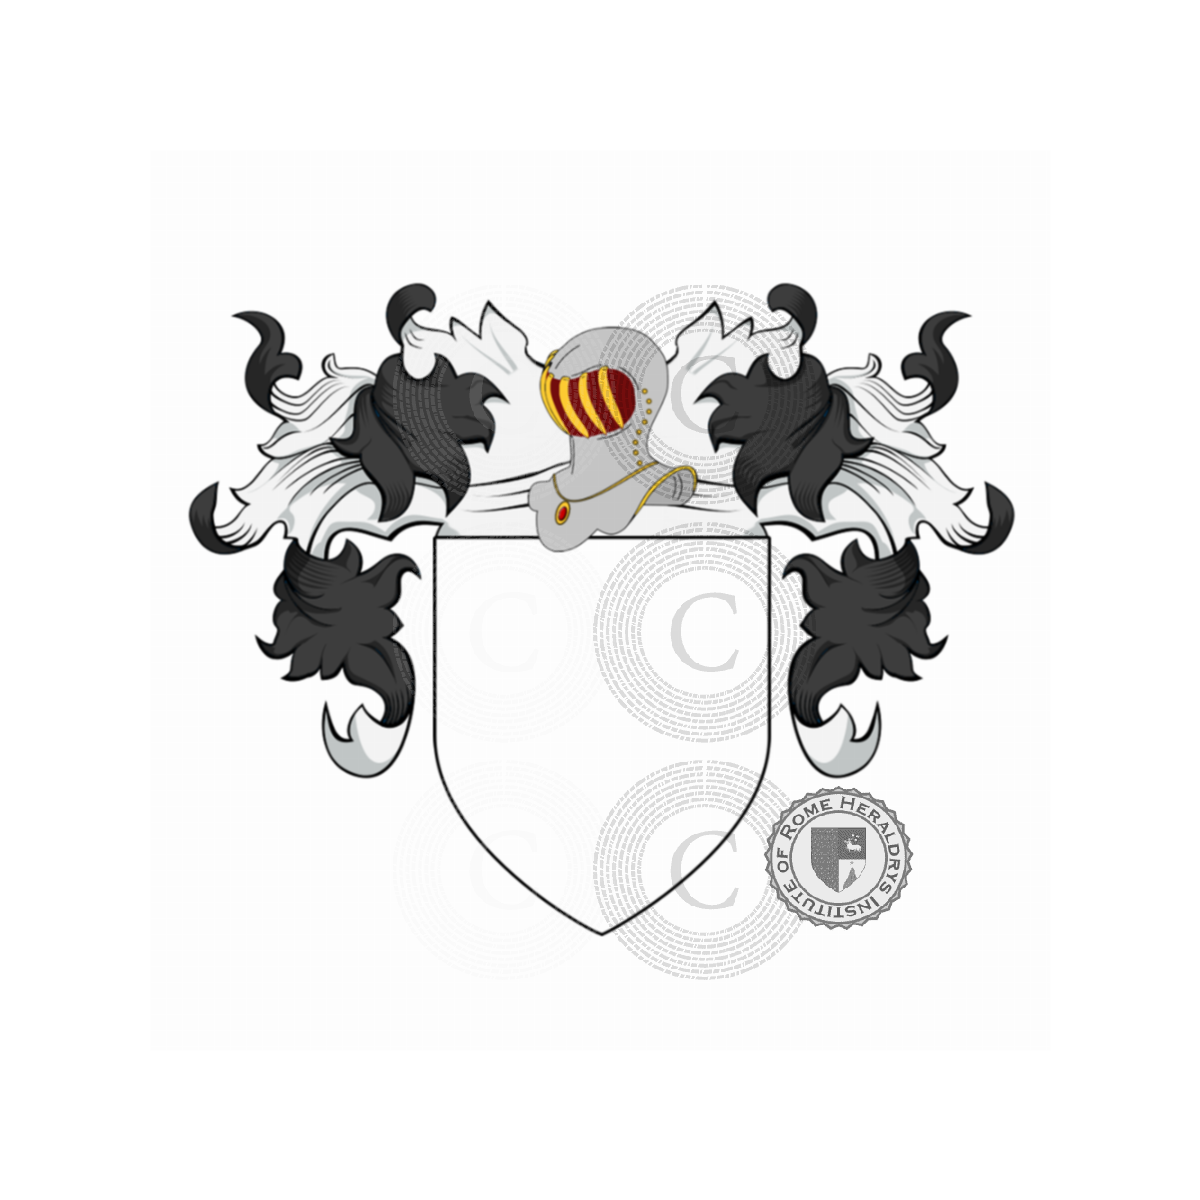 Escudo de la familiaLanfranchi, Franchi Lanfranchi,Lanfranchi Brocci Lanfreducci,Lanfranchi Lanfreducci